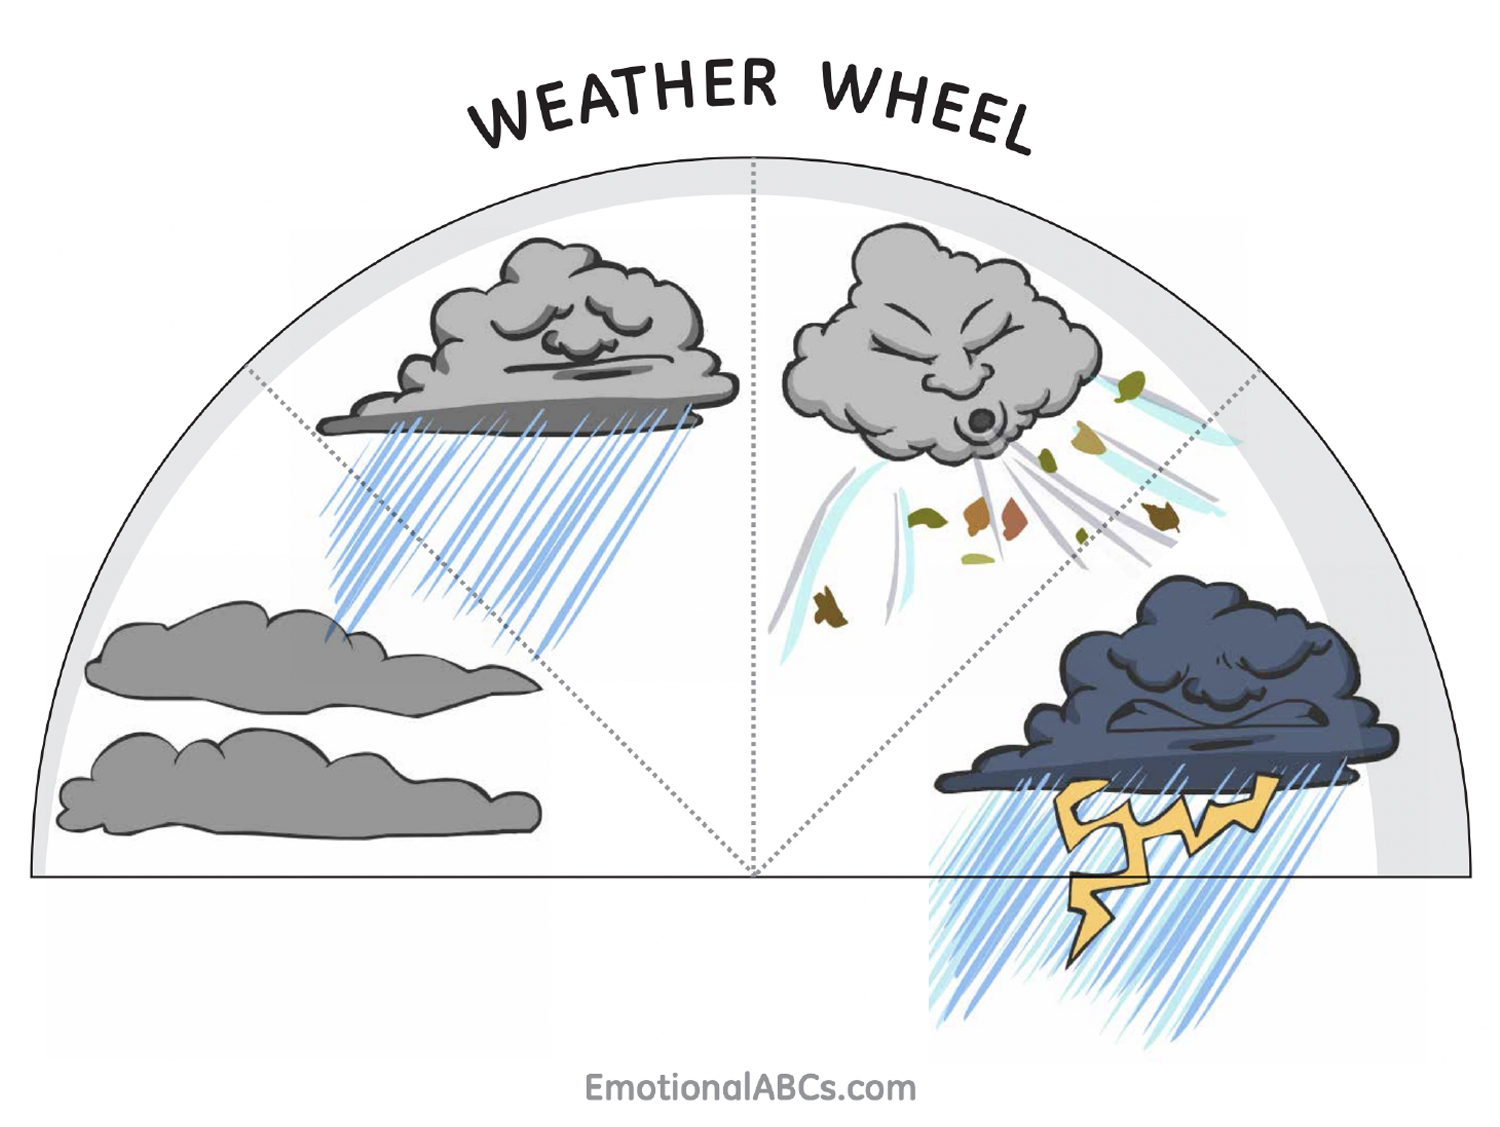 emotional basics: recognizing emotions in weather types